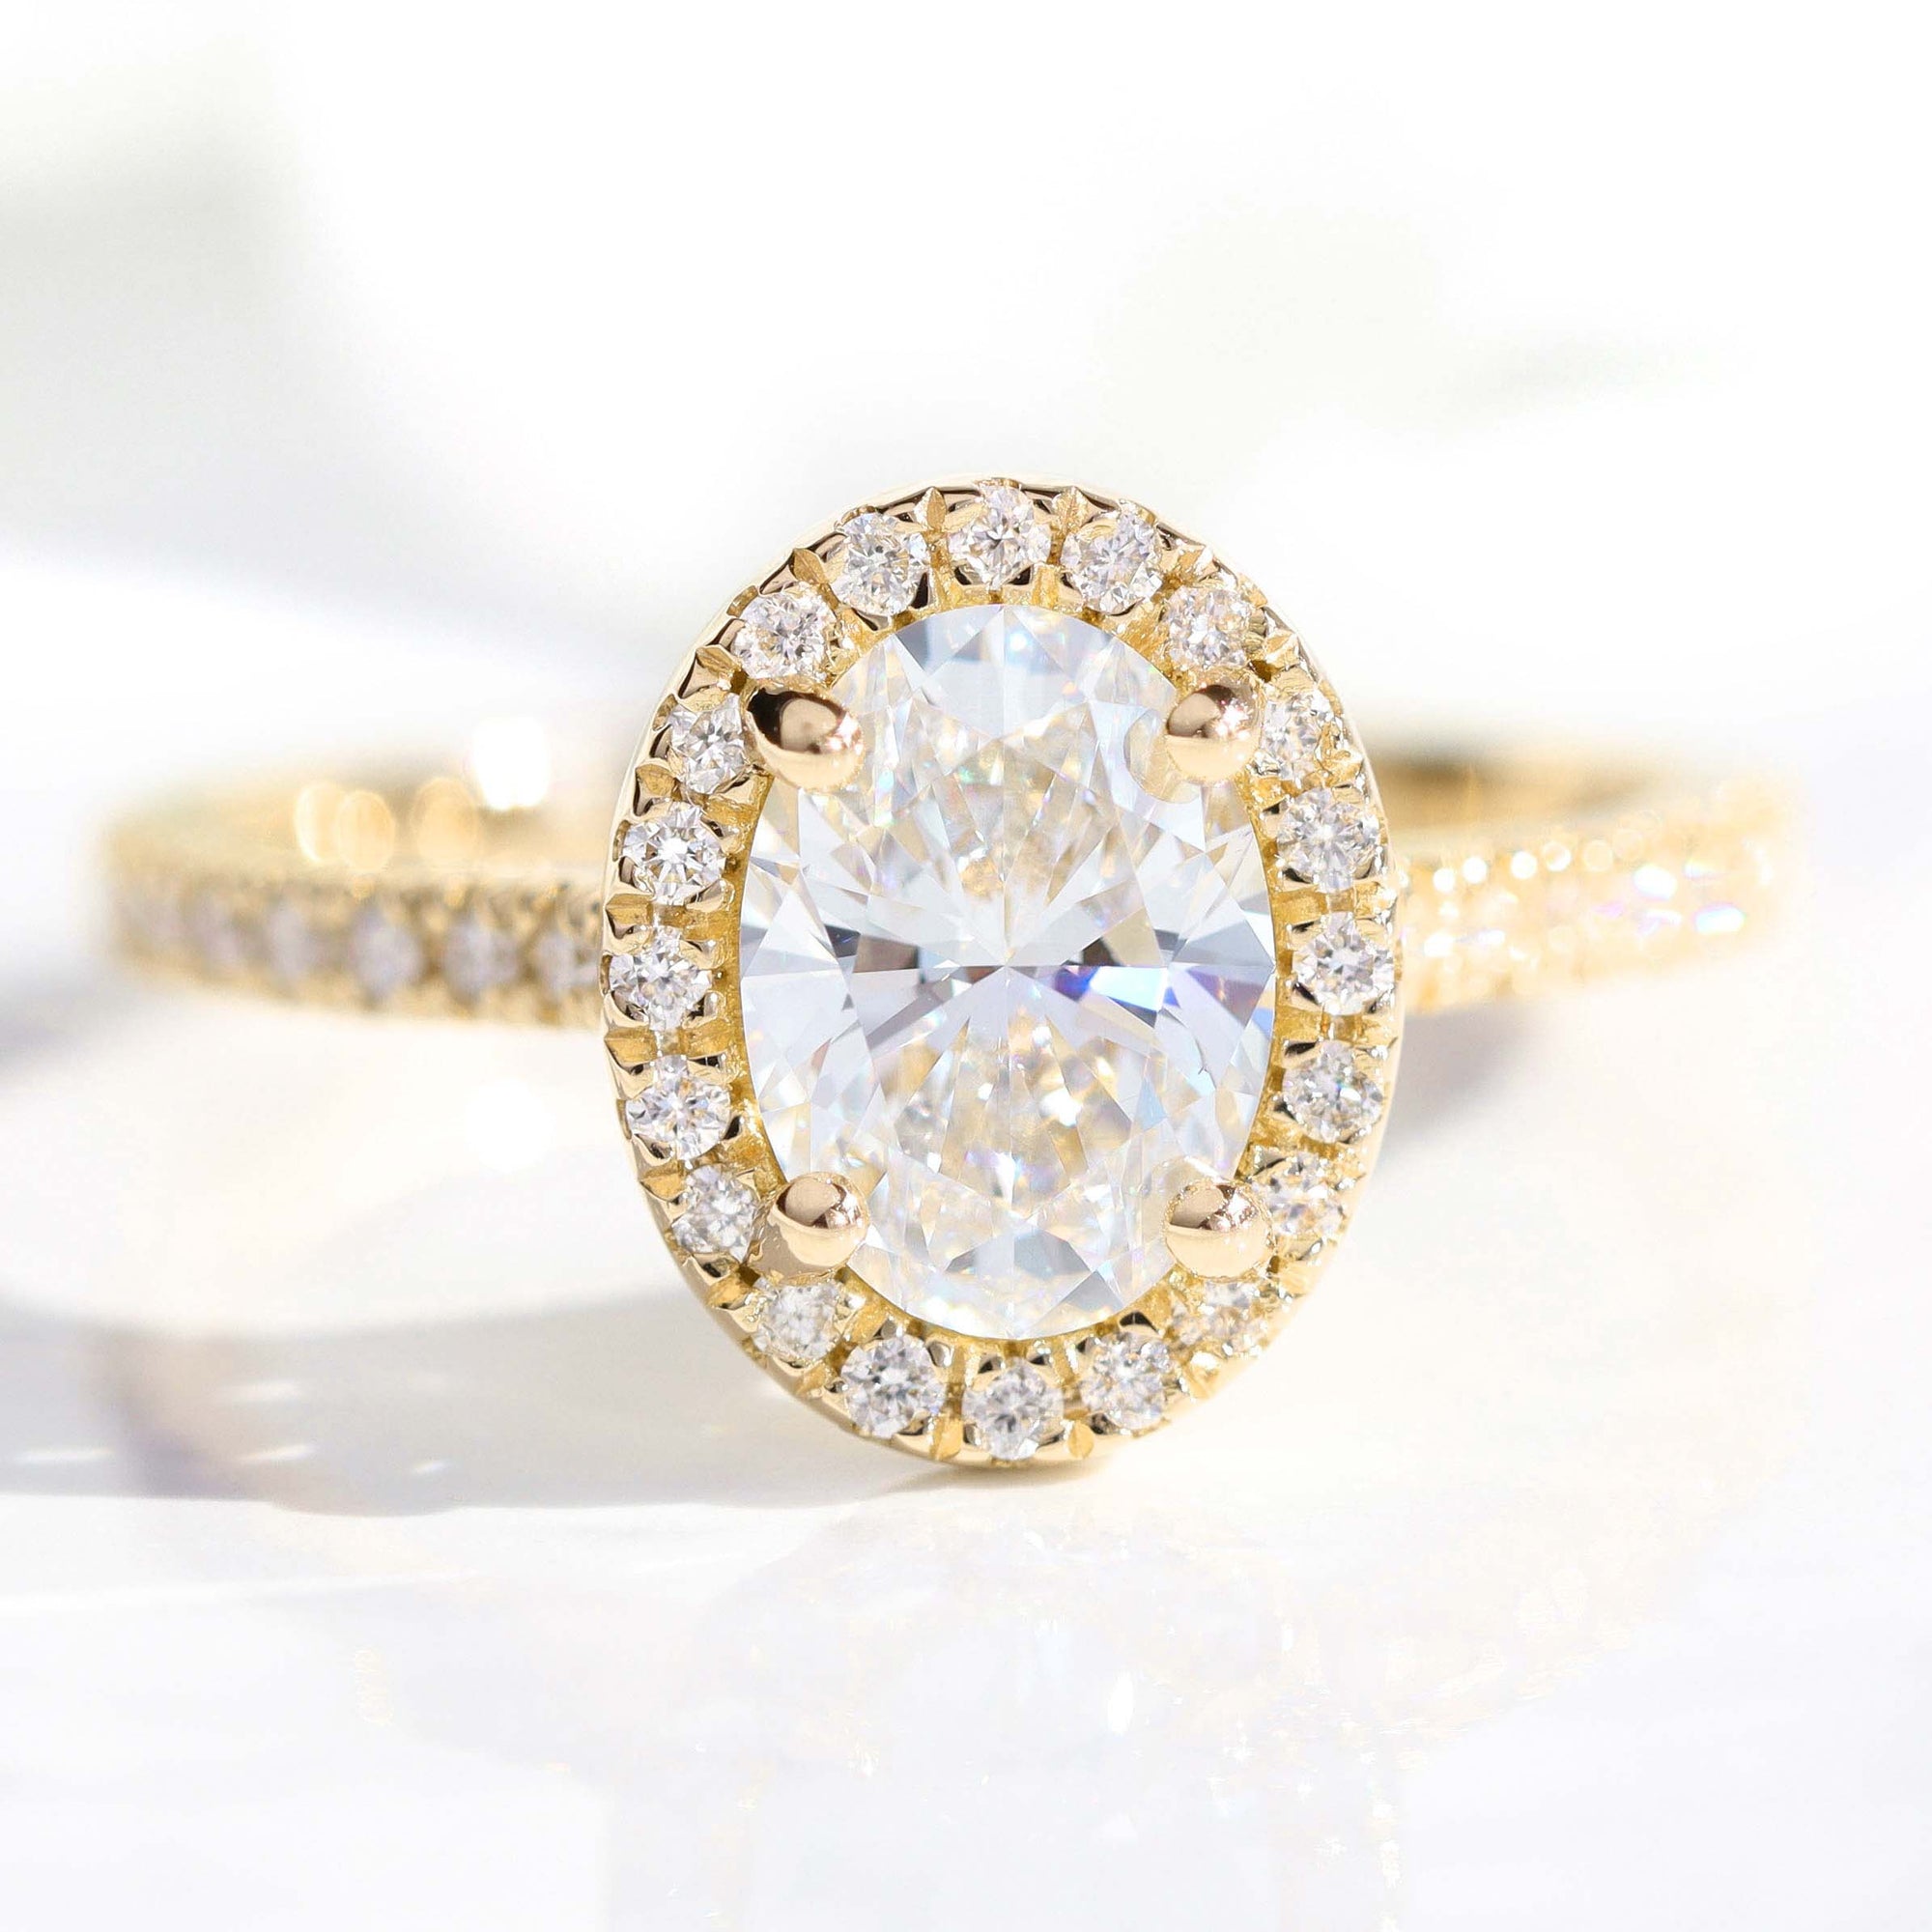 lab diamond ring yellow gold oval diamond halo engagement ring La More Design Jewelry